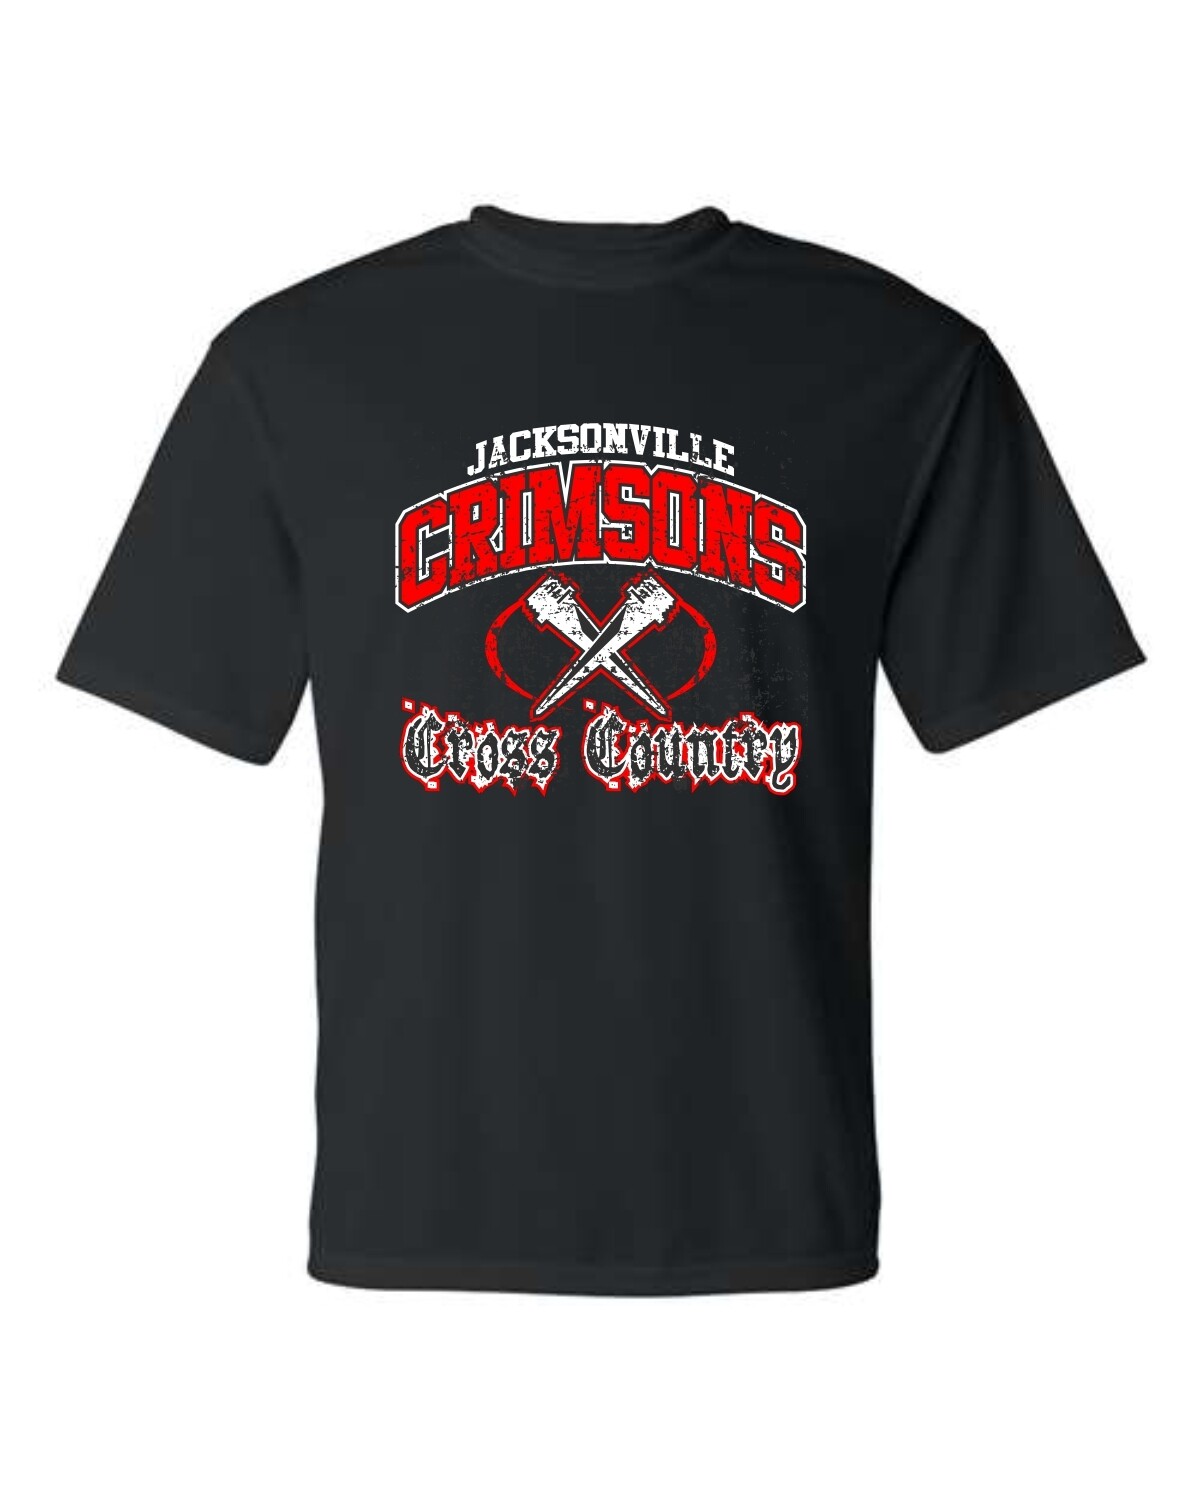 CC-CRIMSONS 5100
BLACK Dri-Fit T-shirt